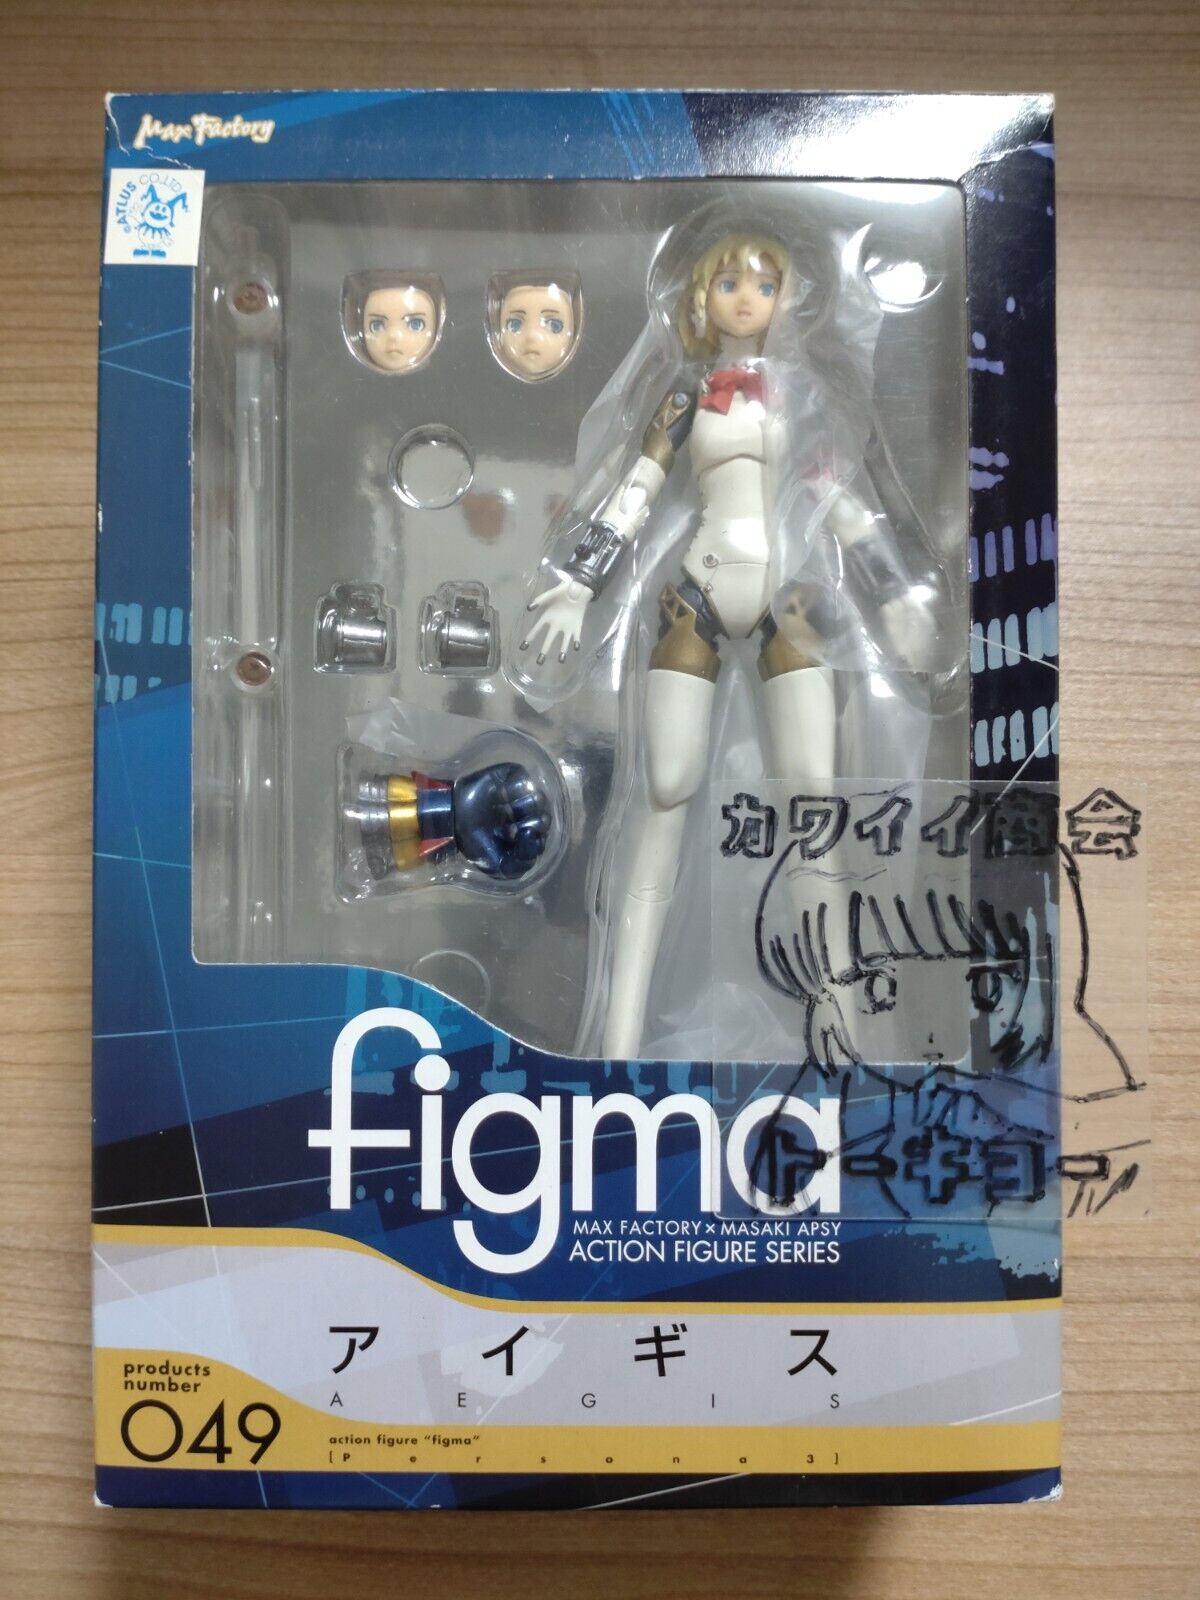 Persona 3 Aegis Aigis Figma 049 Action Figure P3 Max Factory FedEx